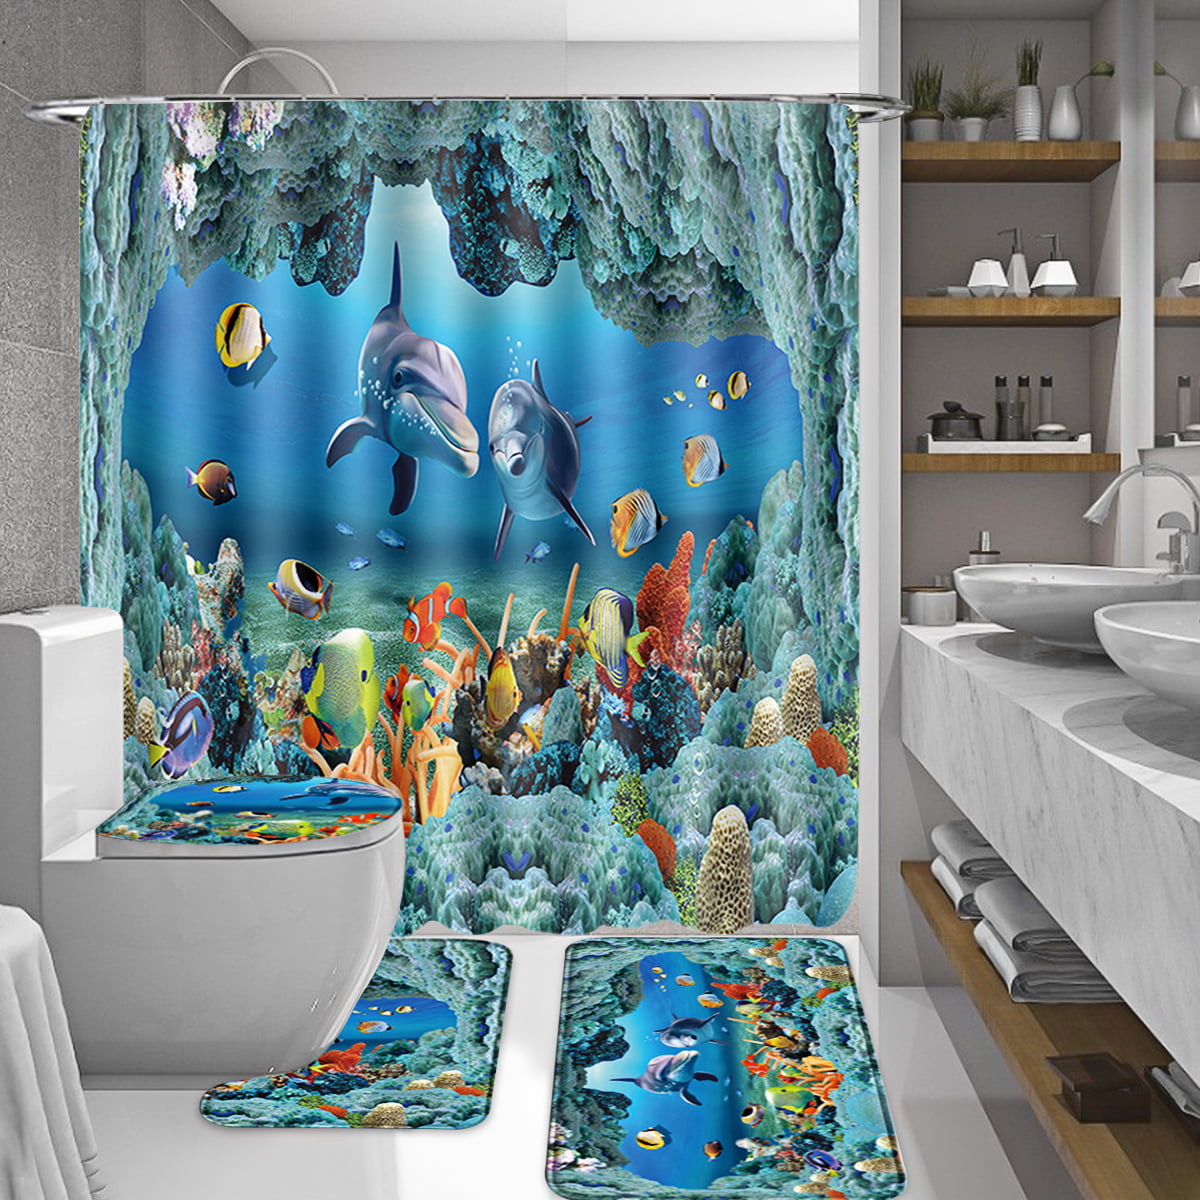 4Pcs Non-Slip Dolphin Bathroom Bath Shower Curtain Toilet Covers Mat ugs Set